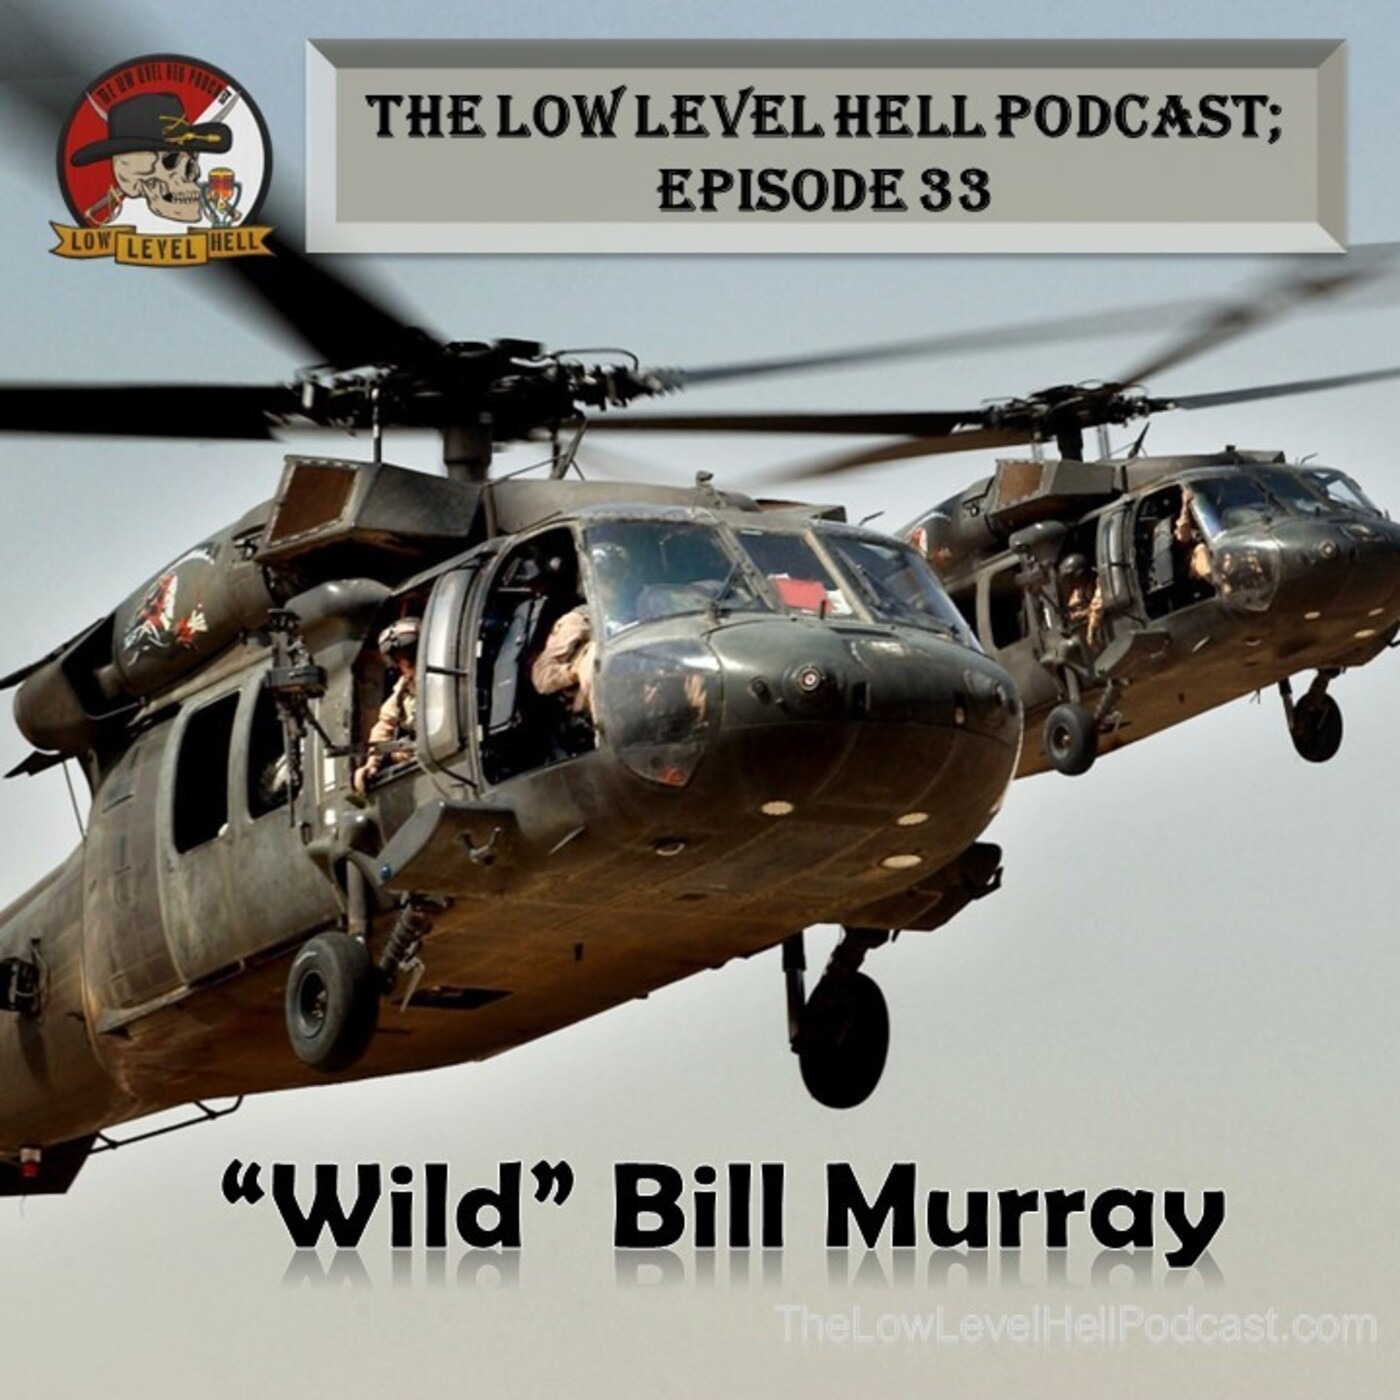 Episode 33: "Wild" Bill Murray